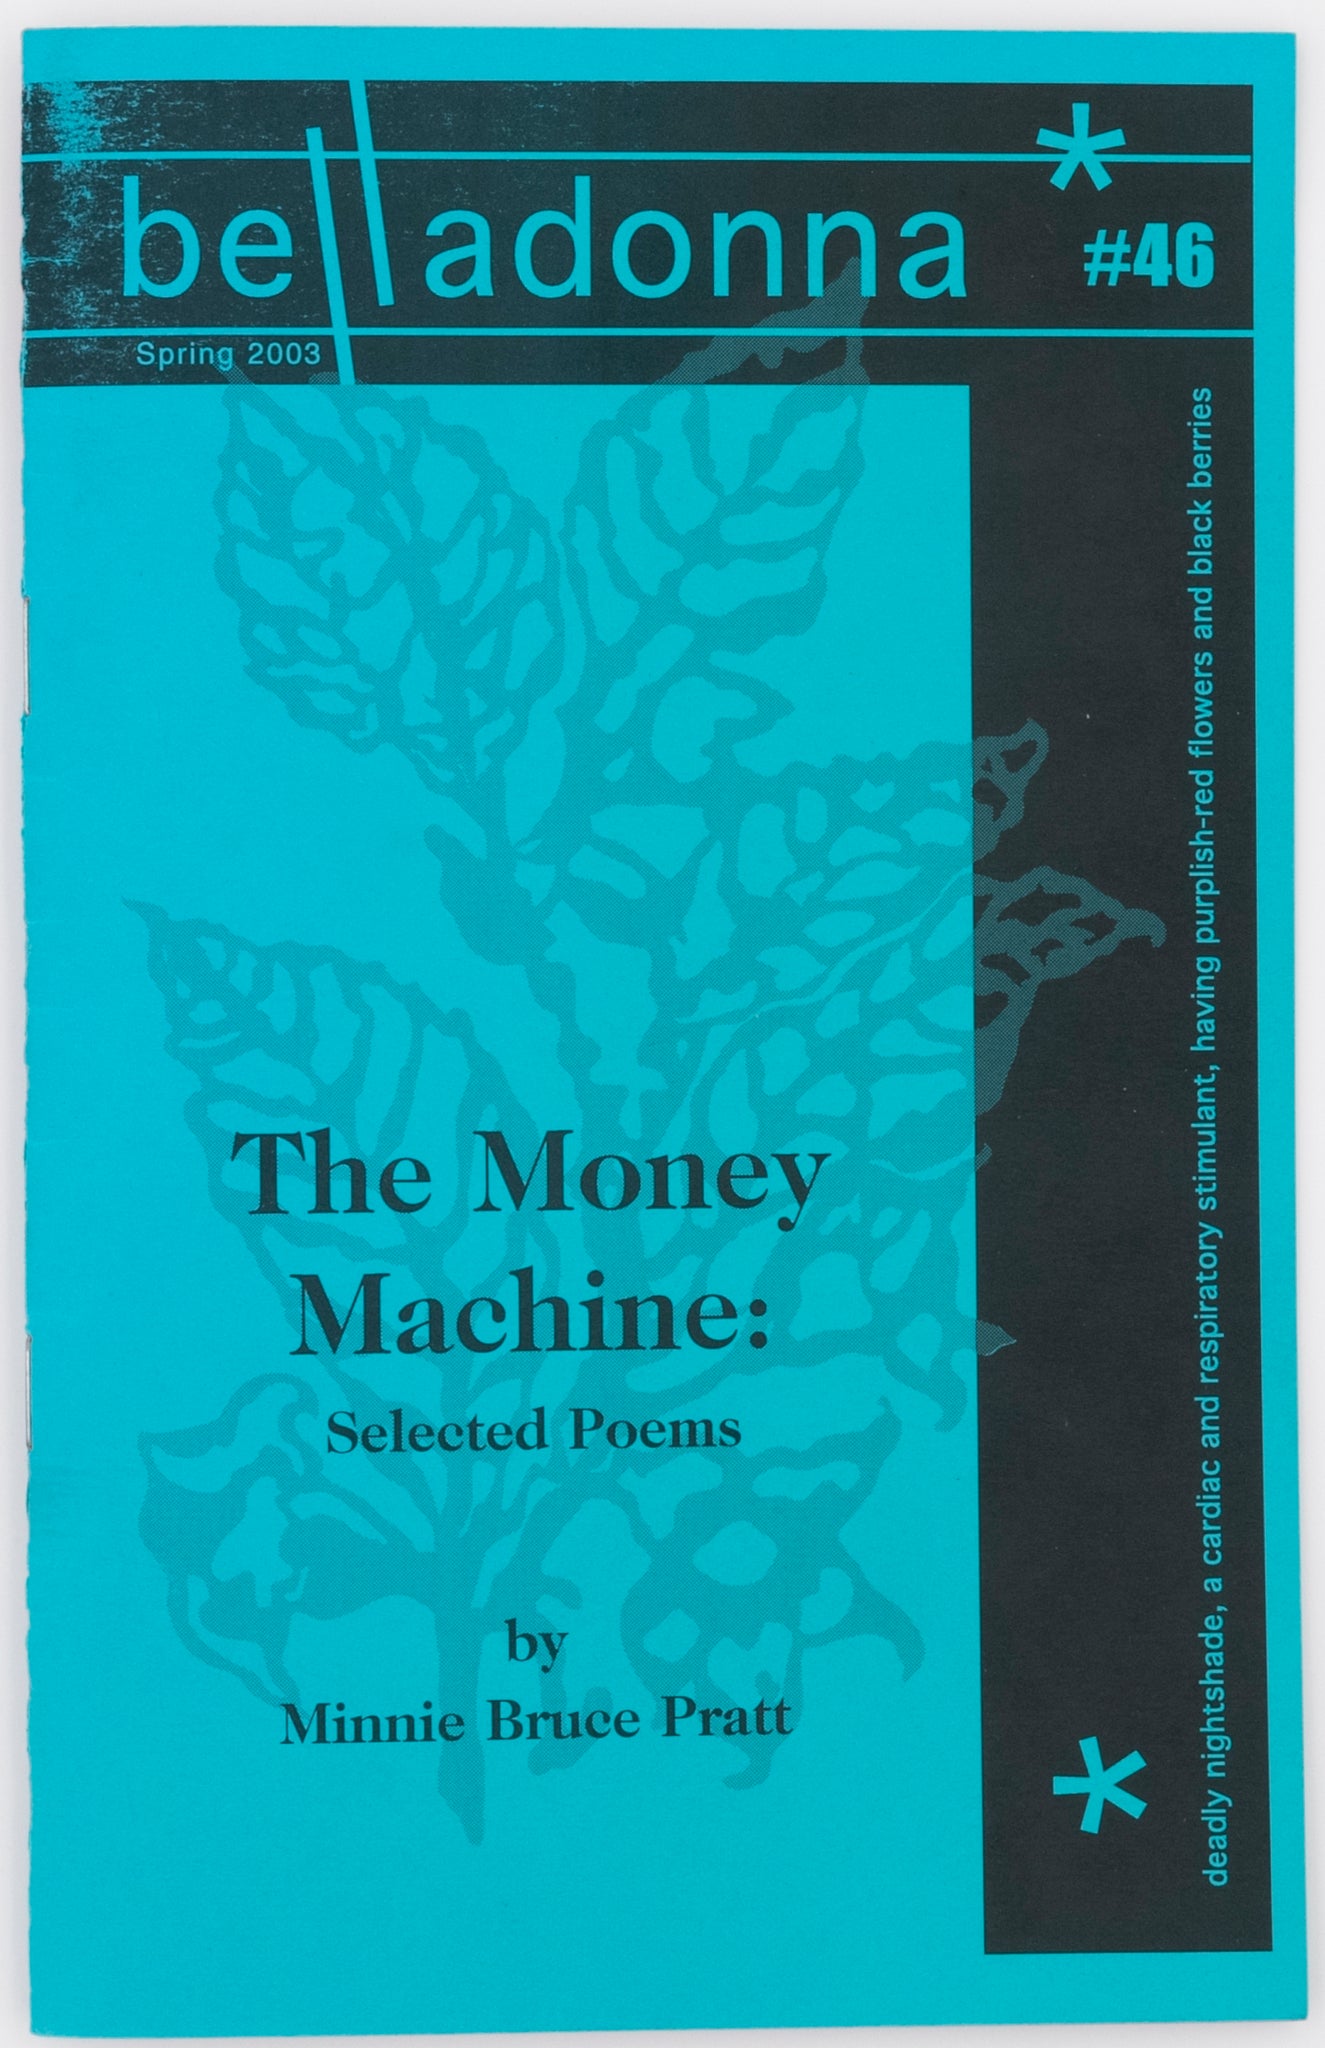 The Money Machine: Selected Poems (Belladonna* #46)